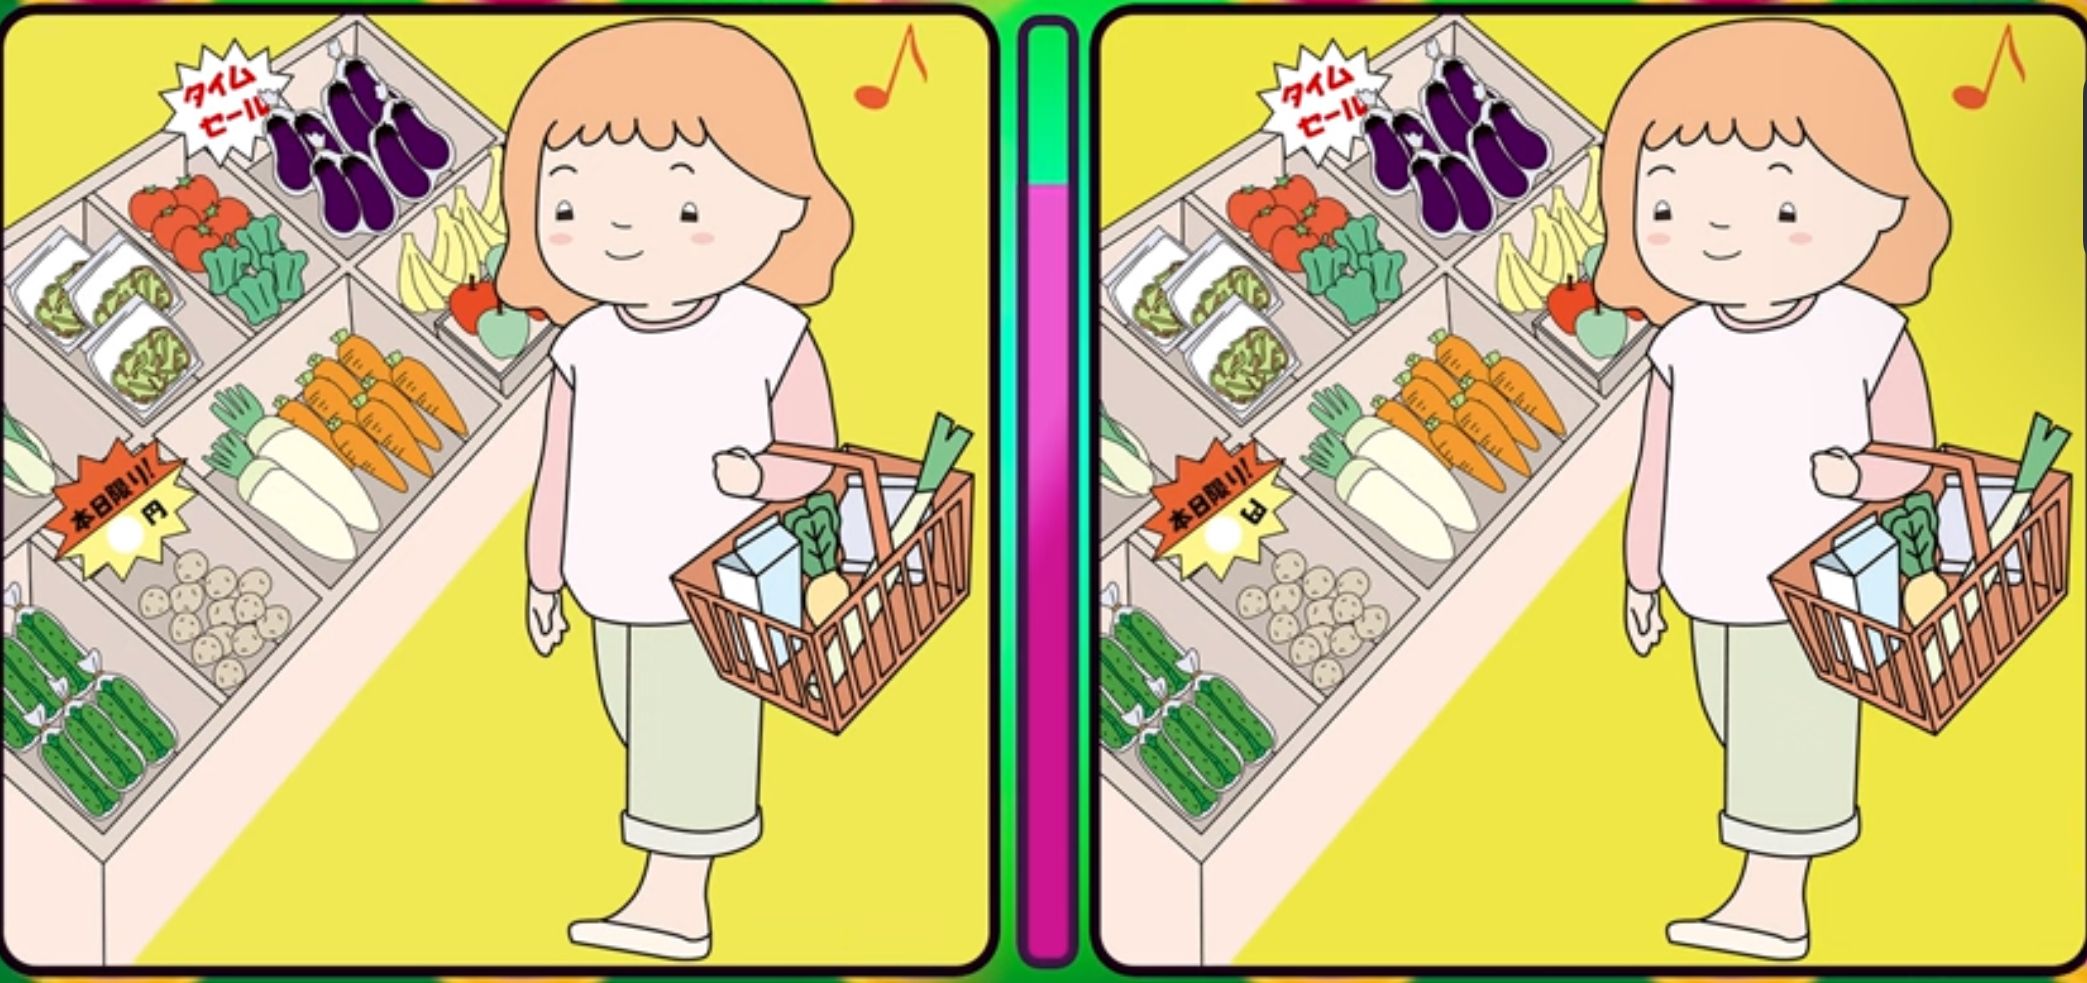 Tajamkan mata, fokuskan mata, dan telitilah perbedaan pada gambar ibu yang sedang belanja sayur di tes IQ kali ini. 